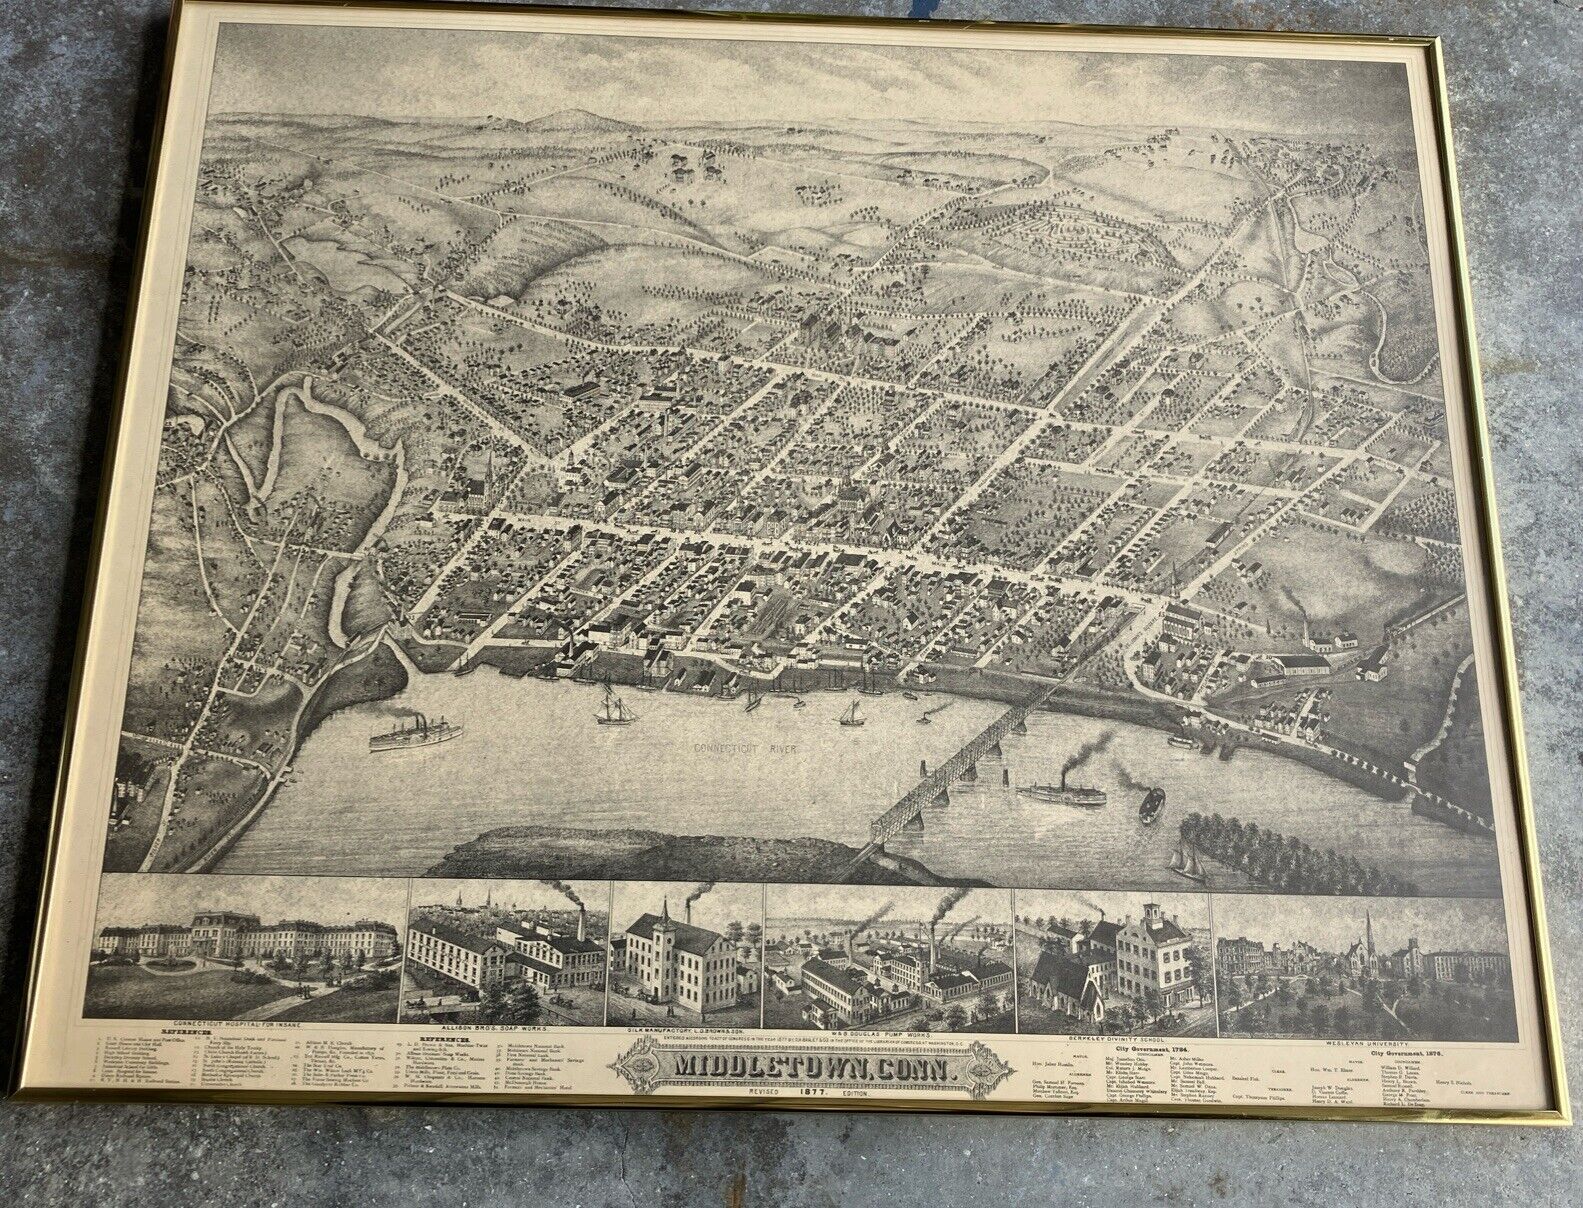 ESTATE SALE LARGE ORIGINAL 1877 EDITION MAP OF MIDDLETOWN, CONN 29